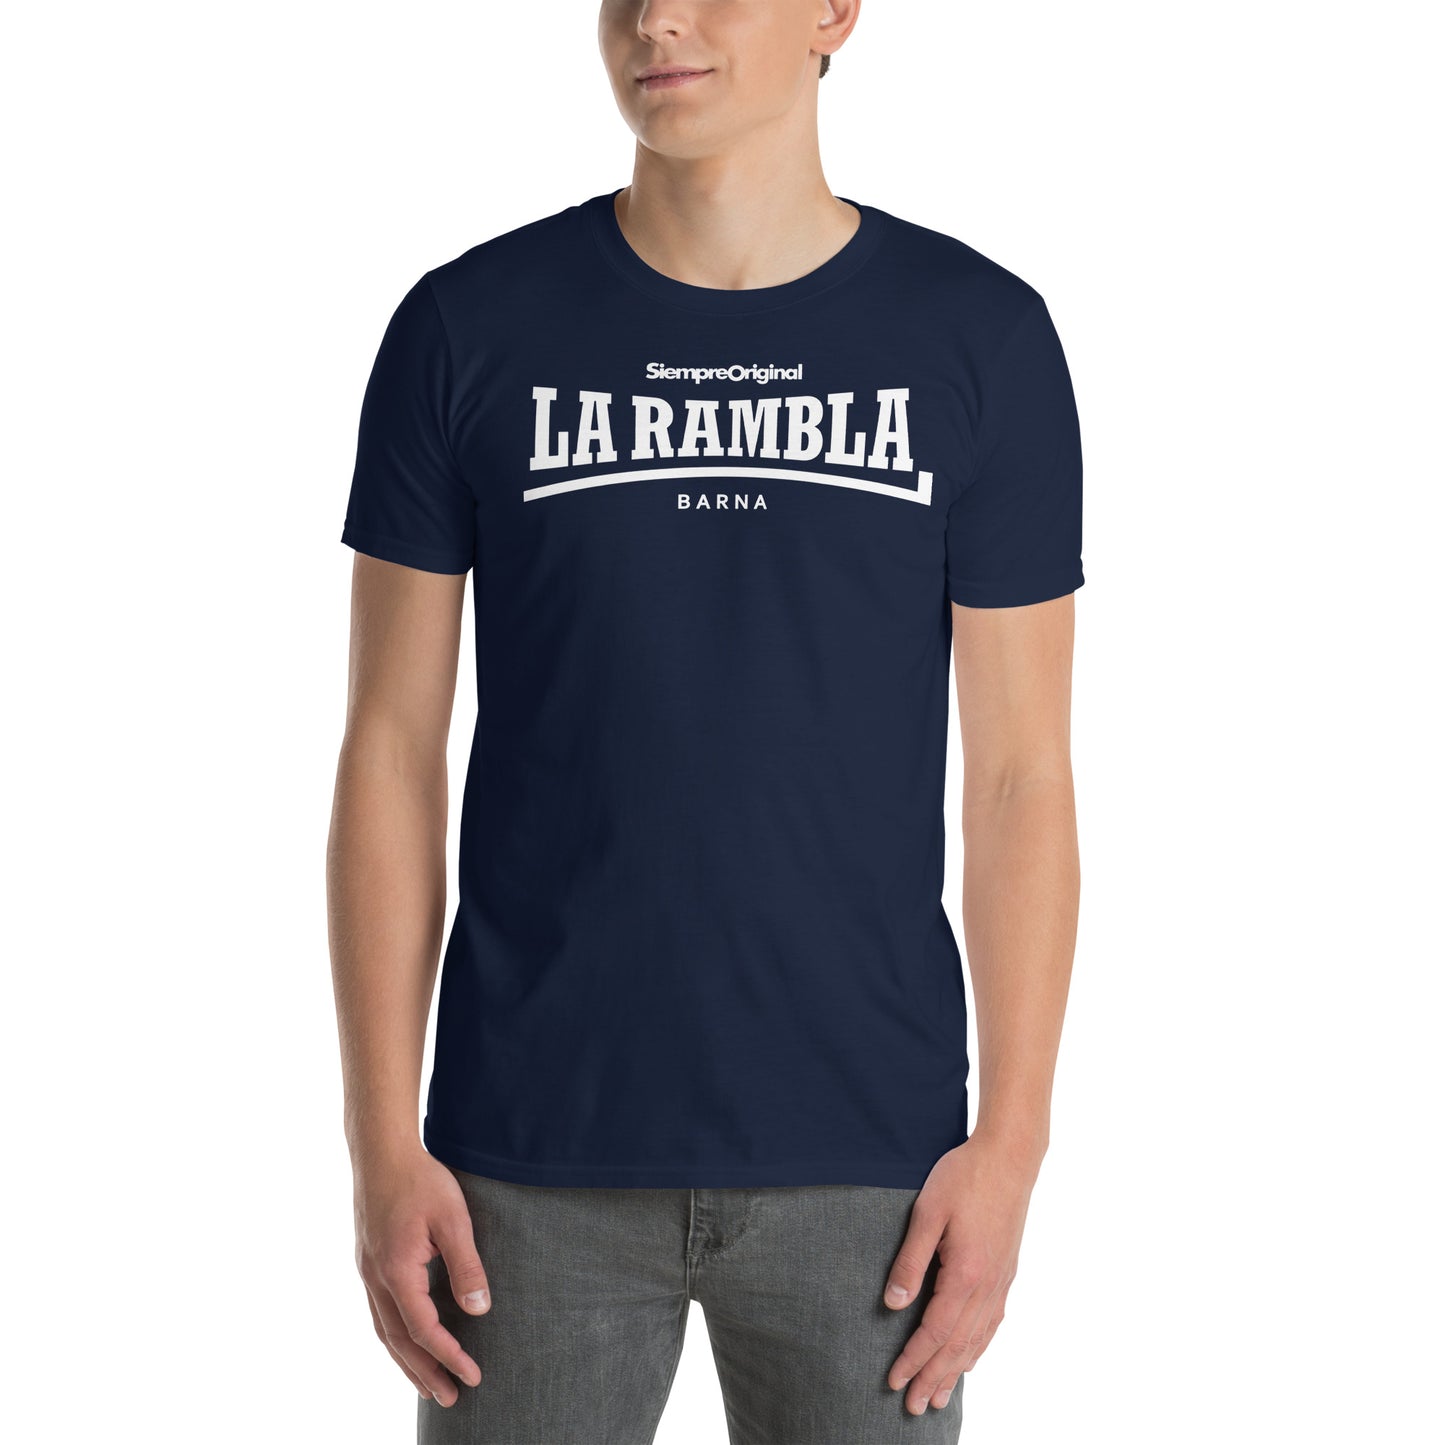 Camiseta de La Rambla - Barcelona. Color Azul Marino.